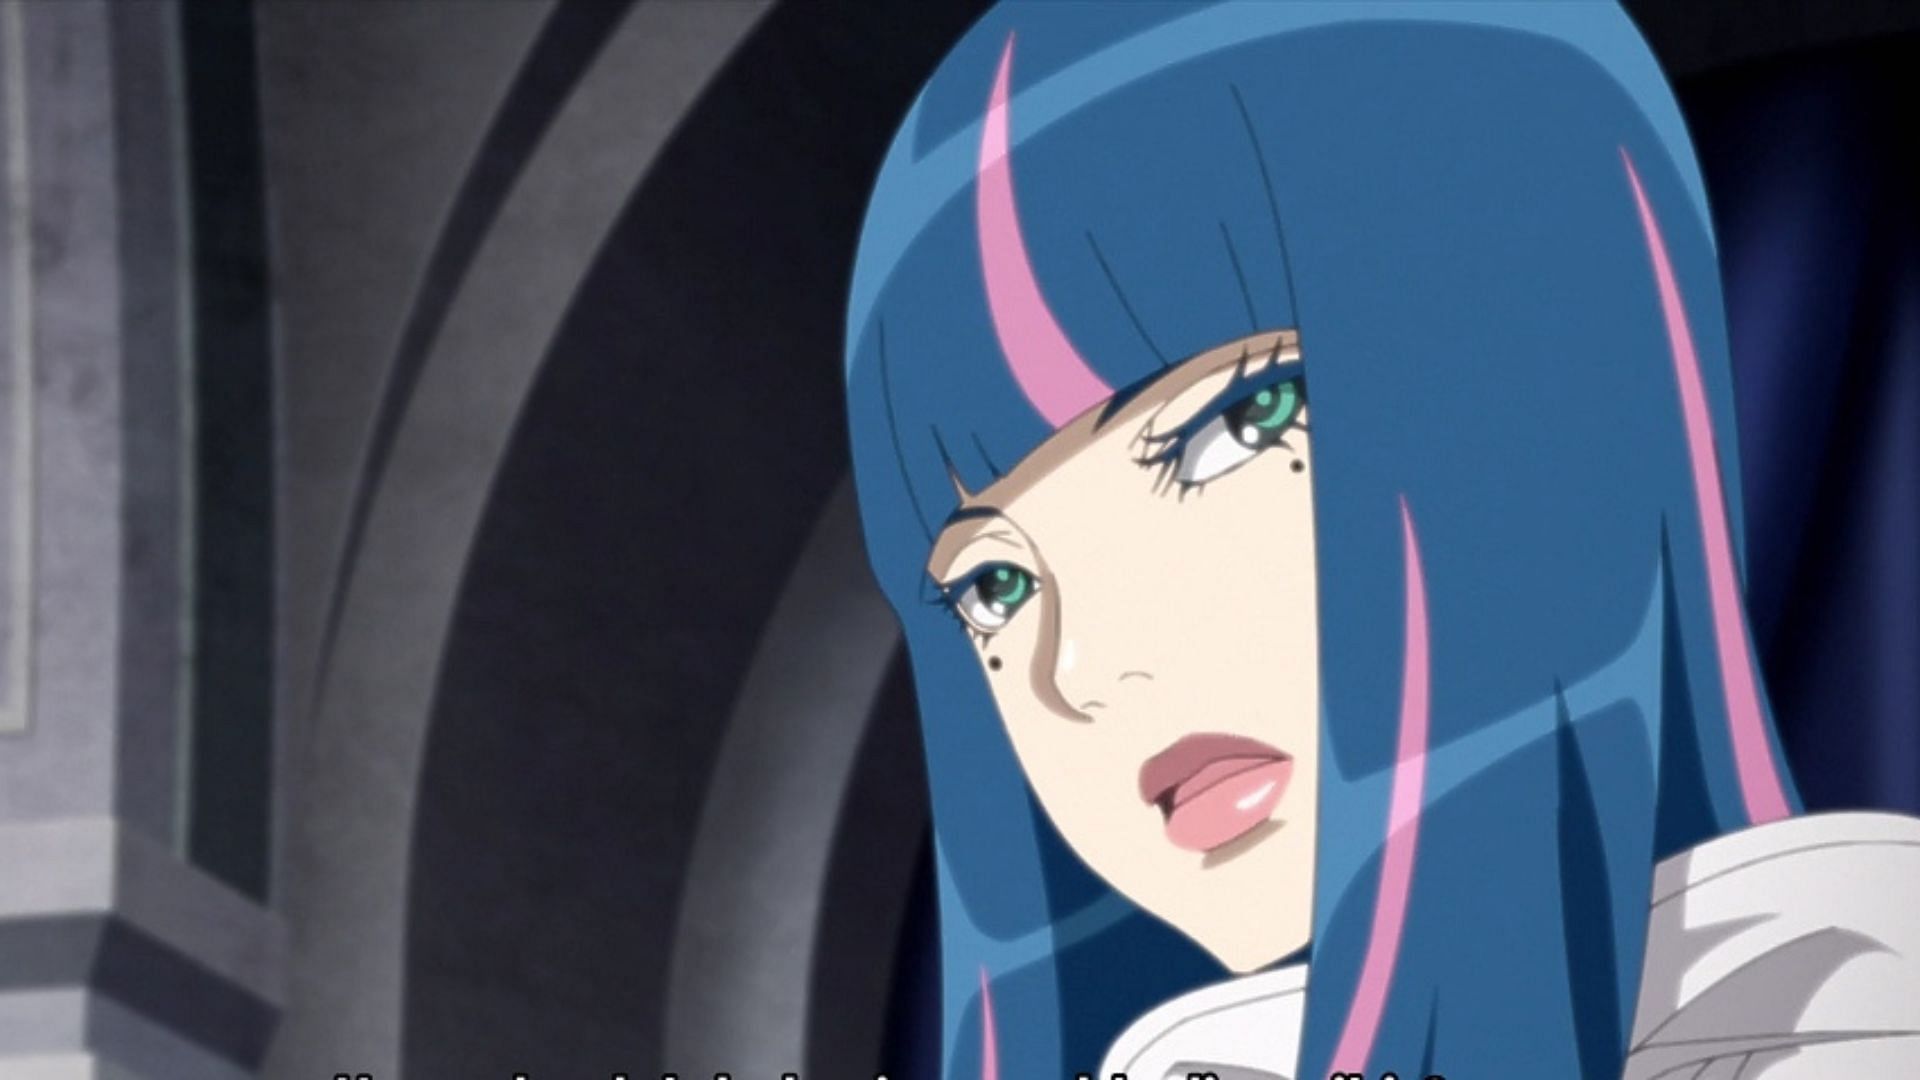 Eida as seen in the anime (Image via Studio Pierrot)